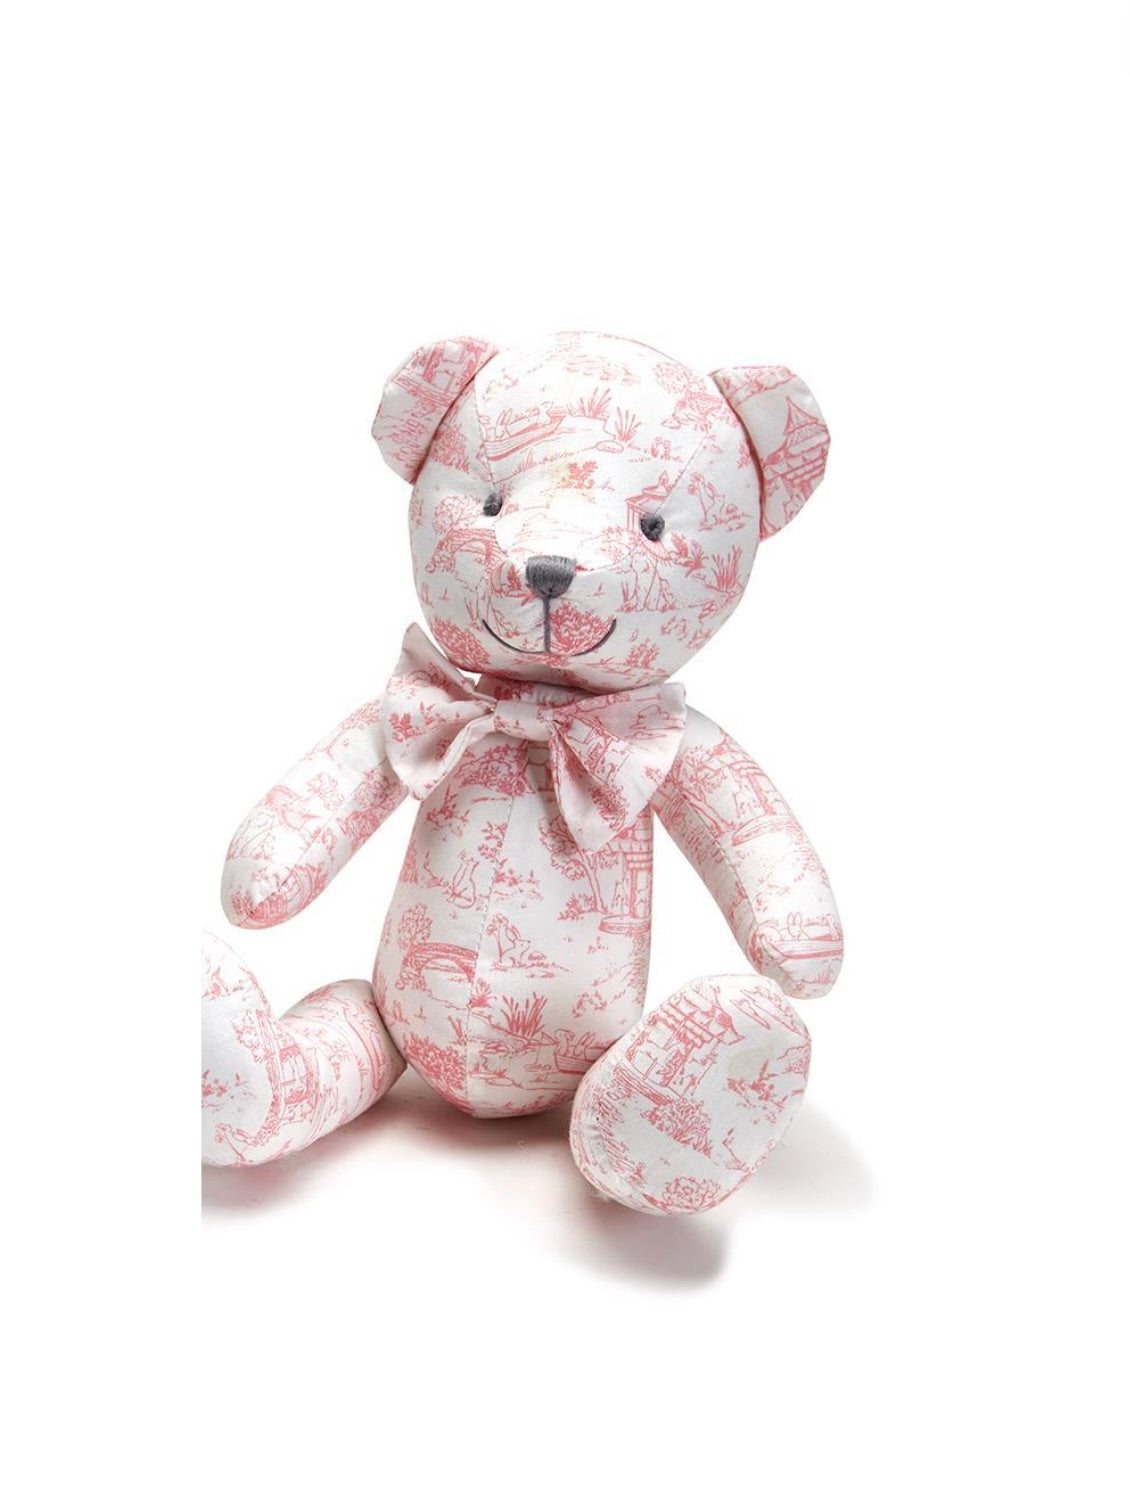 Toile Stuffed Teddy Bear - Pink